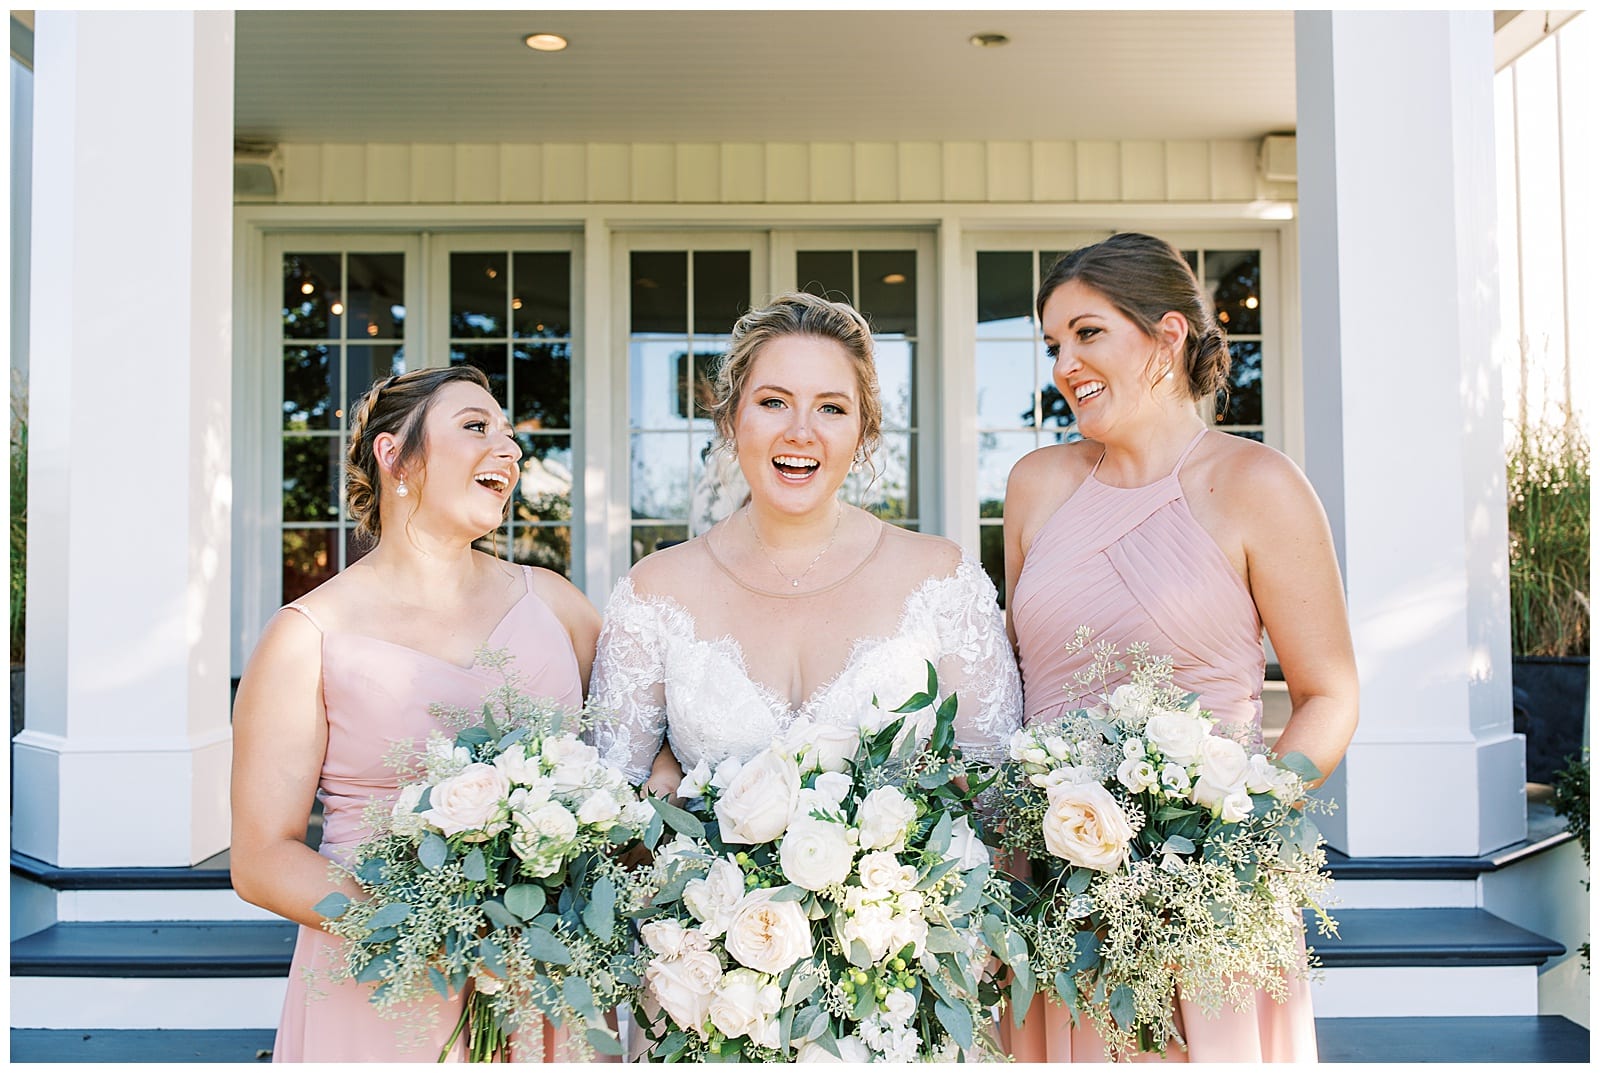 Danielle-Defayette-Photography-Castle-Hill-Cider-Charlottesville-Wedding-2020_0037.jpg